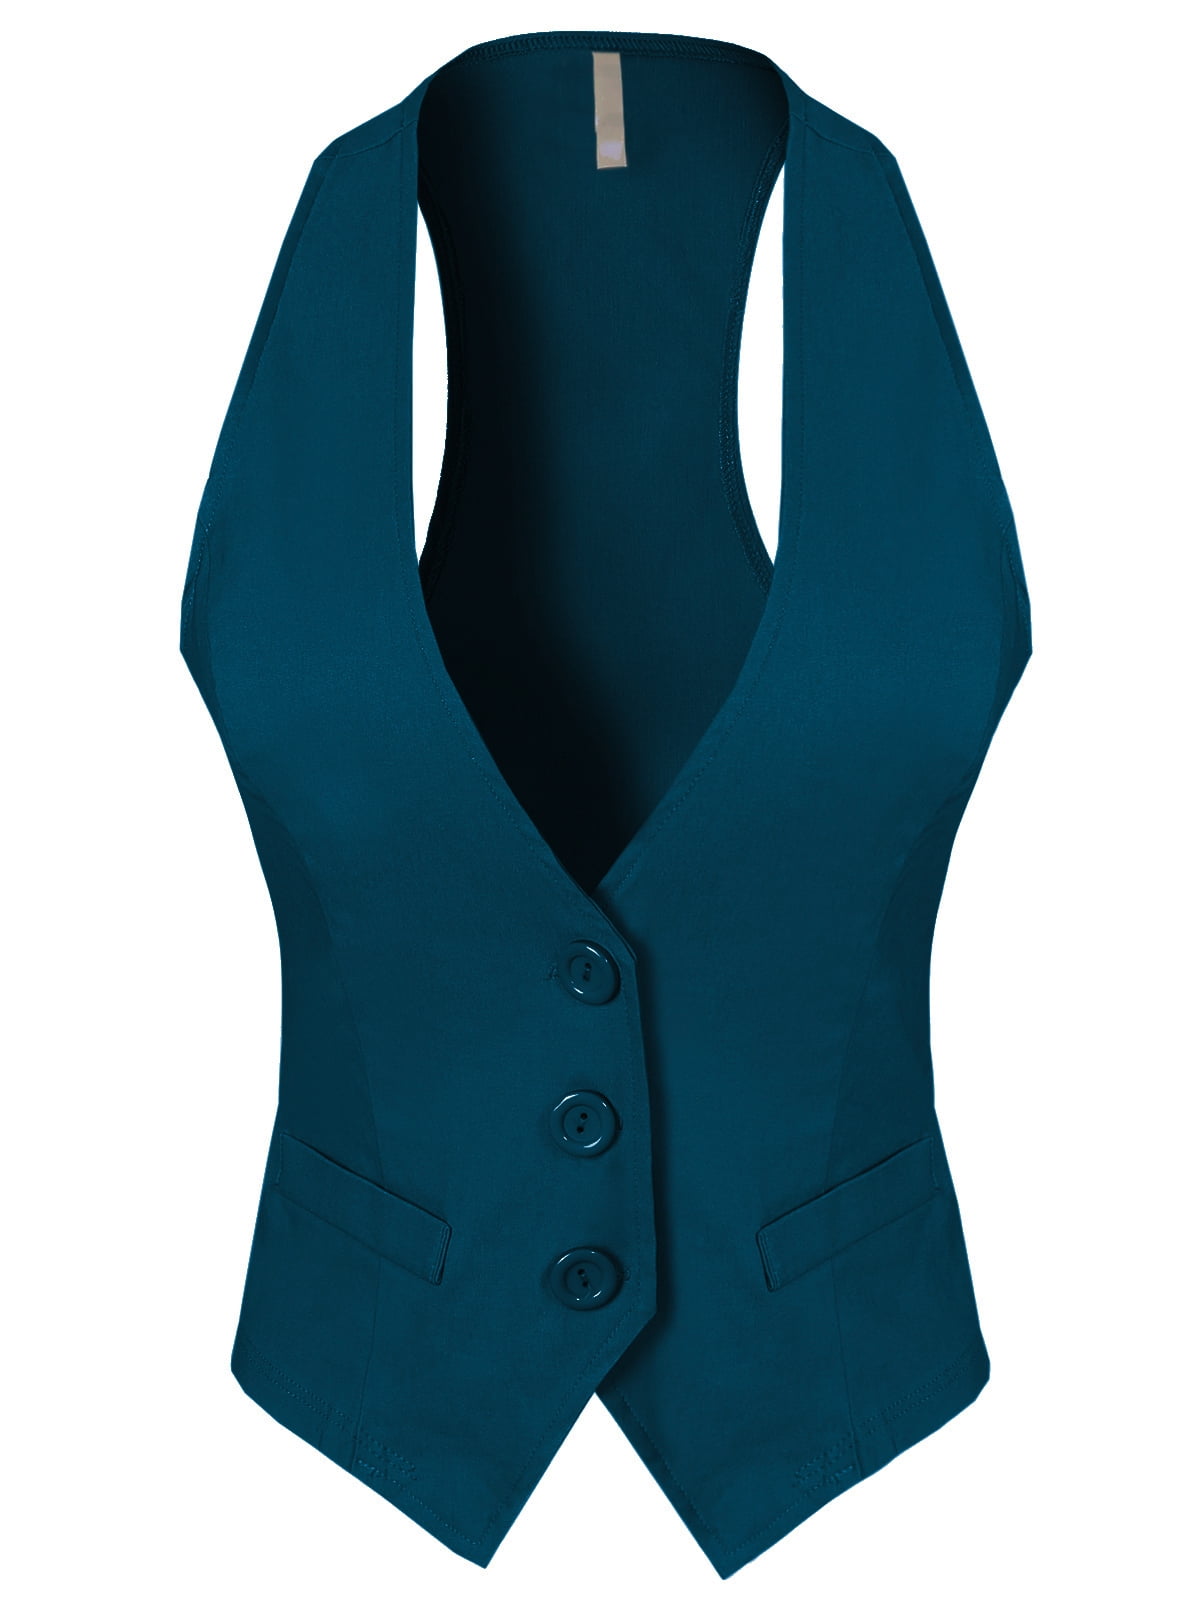 Vest Turquoise Full Back Neck Tie Cardi Tuxedo Steampunk Wedding Prom Groom 